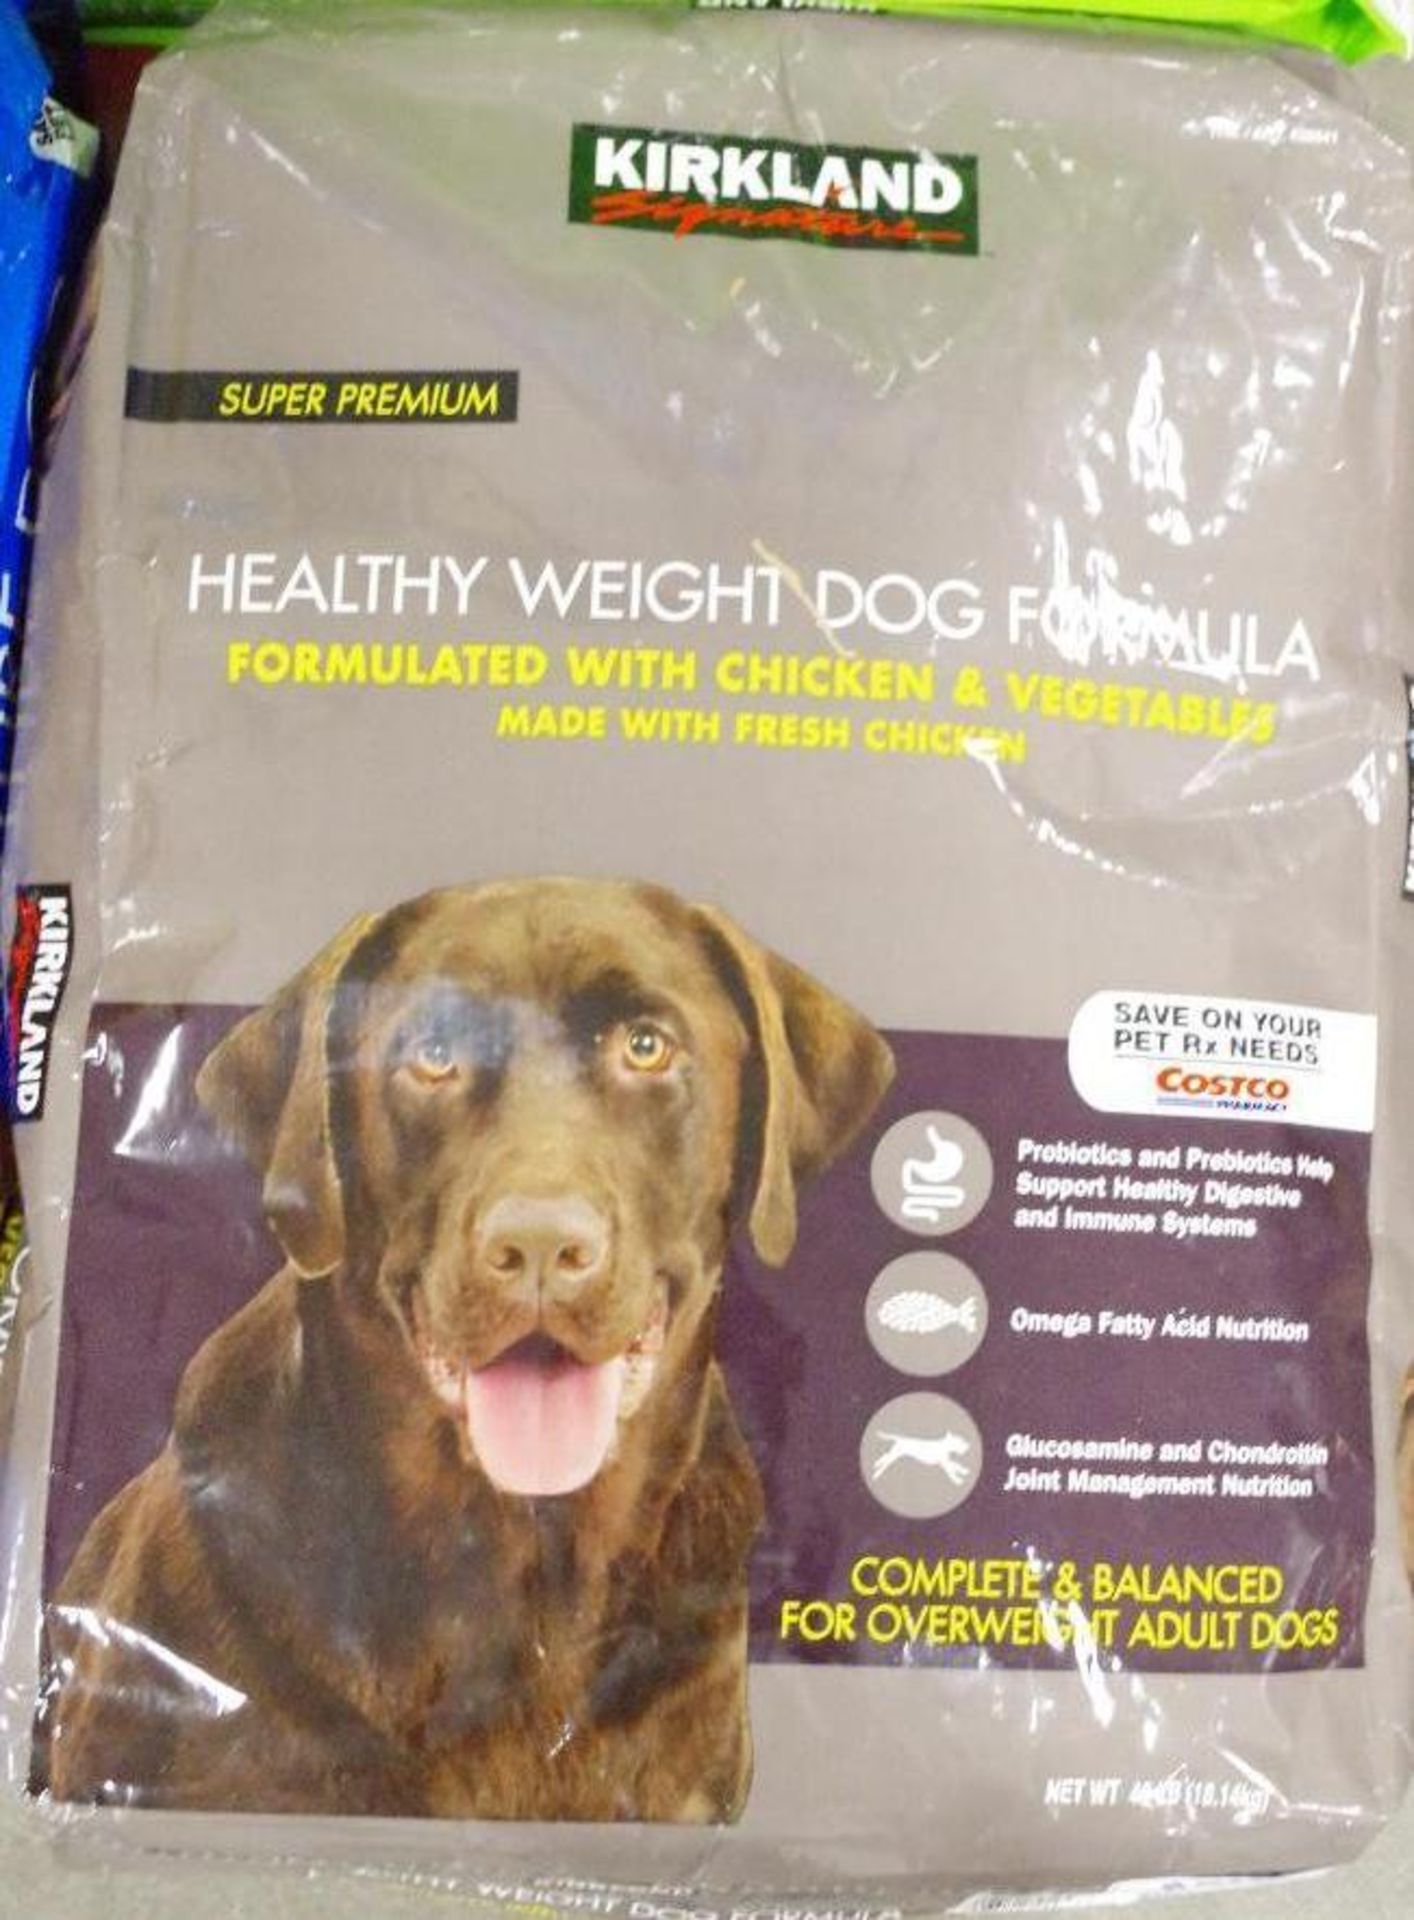 KIRKLAND SUPER PREMIUM 40-lbs. Healthy Weight Dog Food Bag